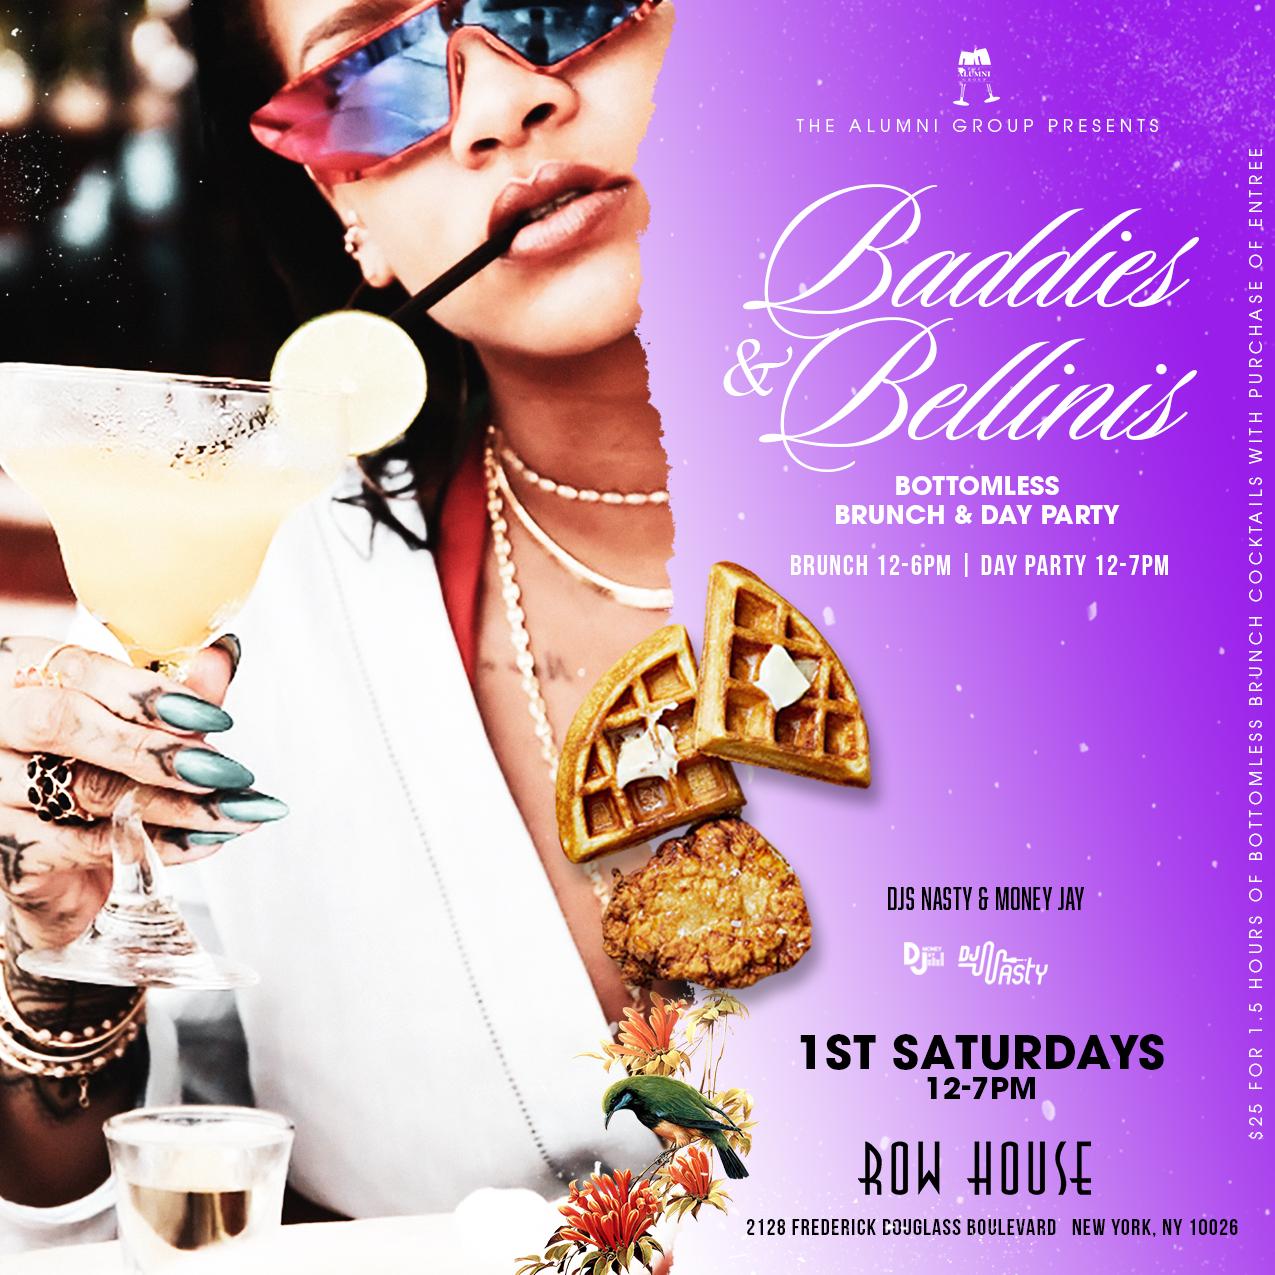 Baddies & Bellinis - 1st Saturdays Bottomless Brunch & Day Party